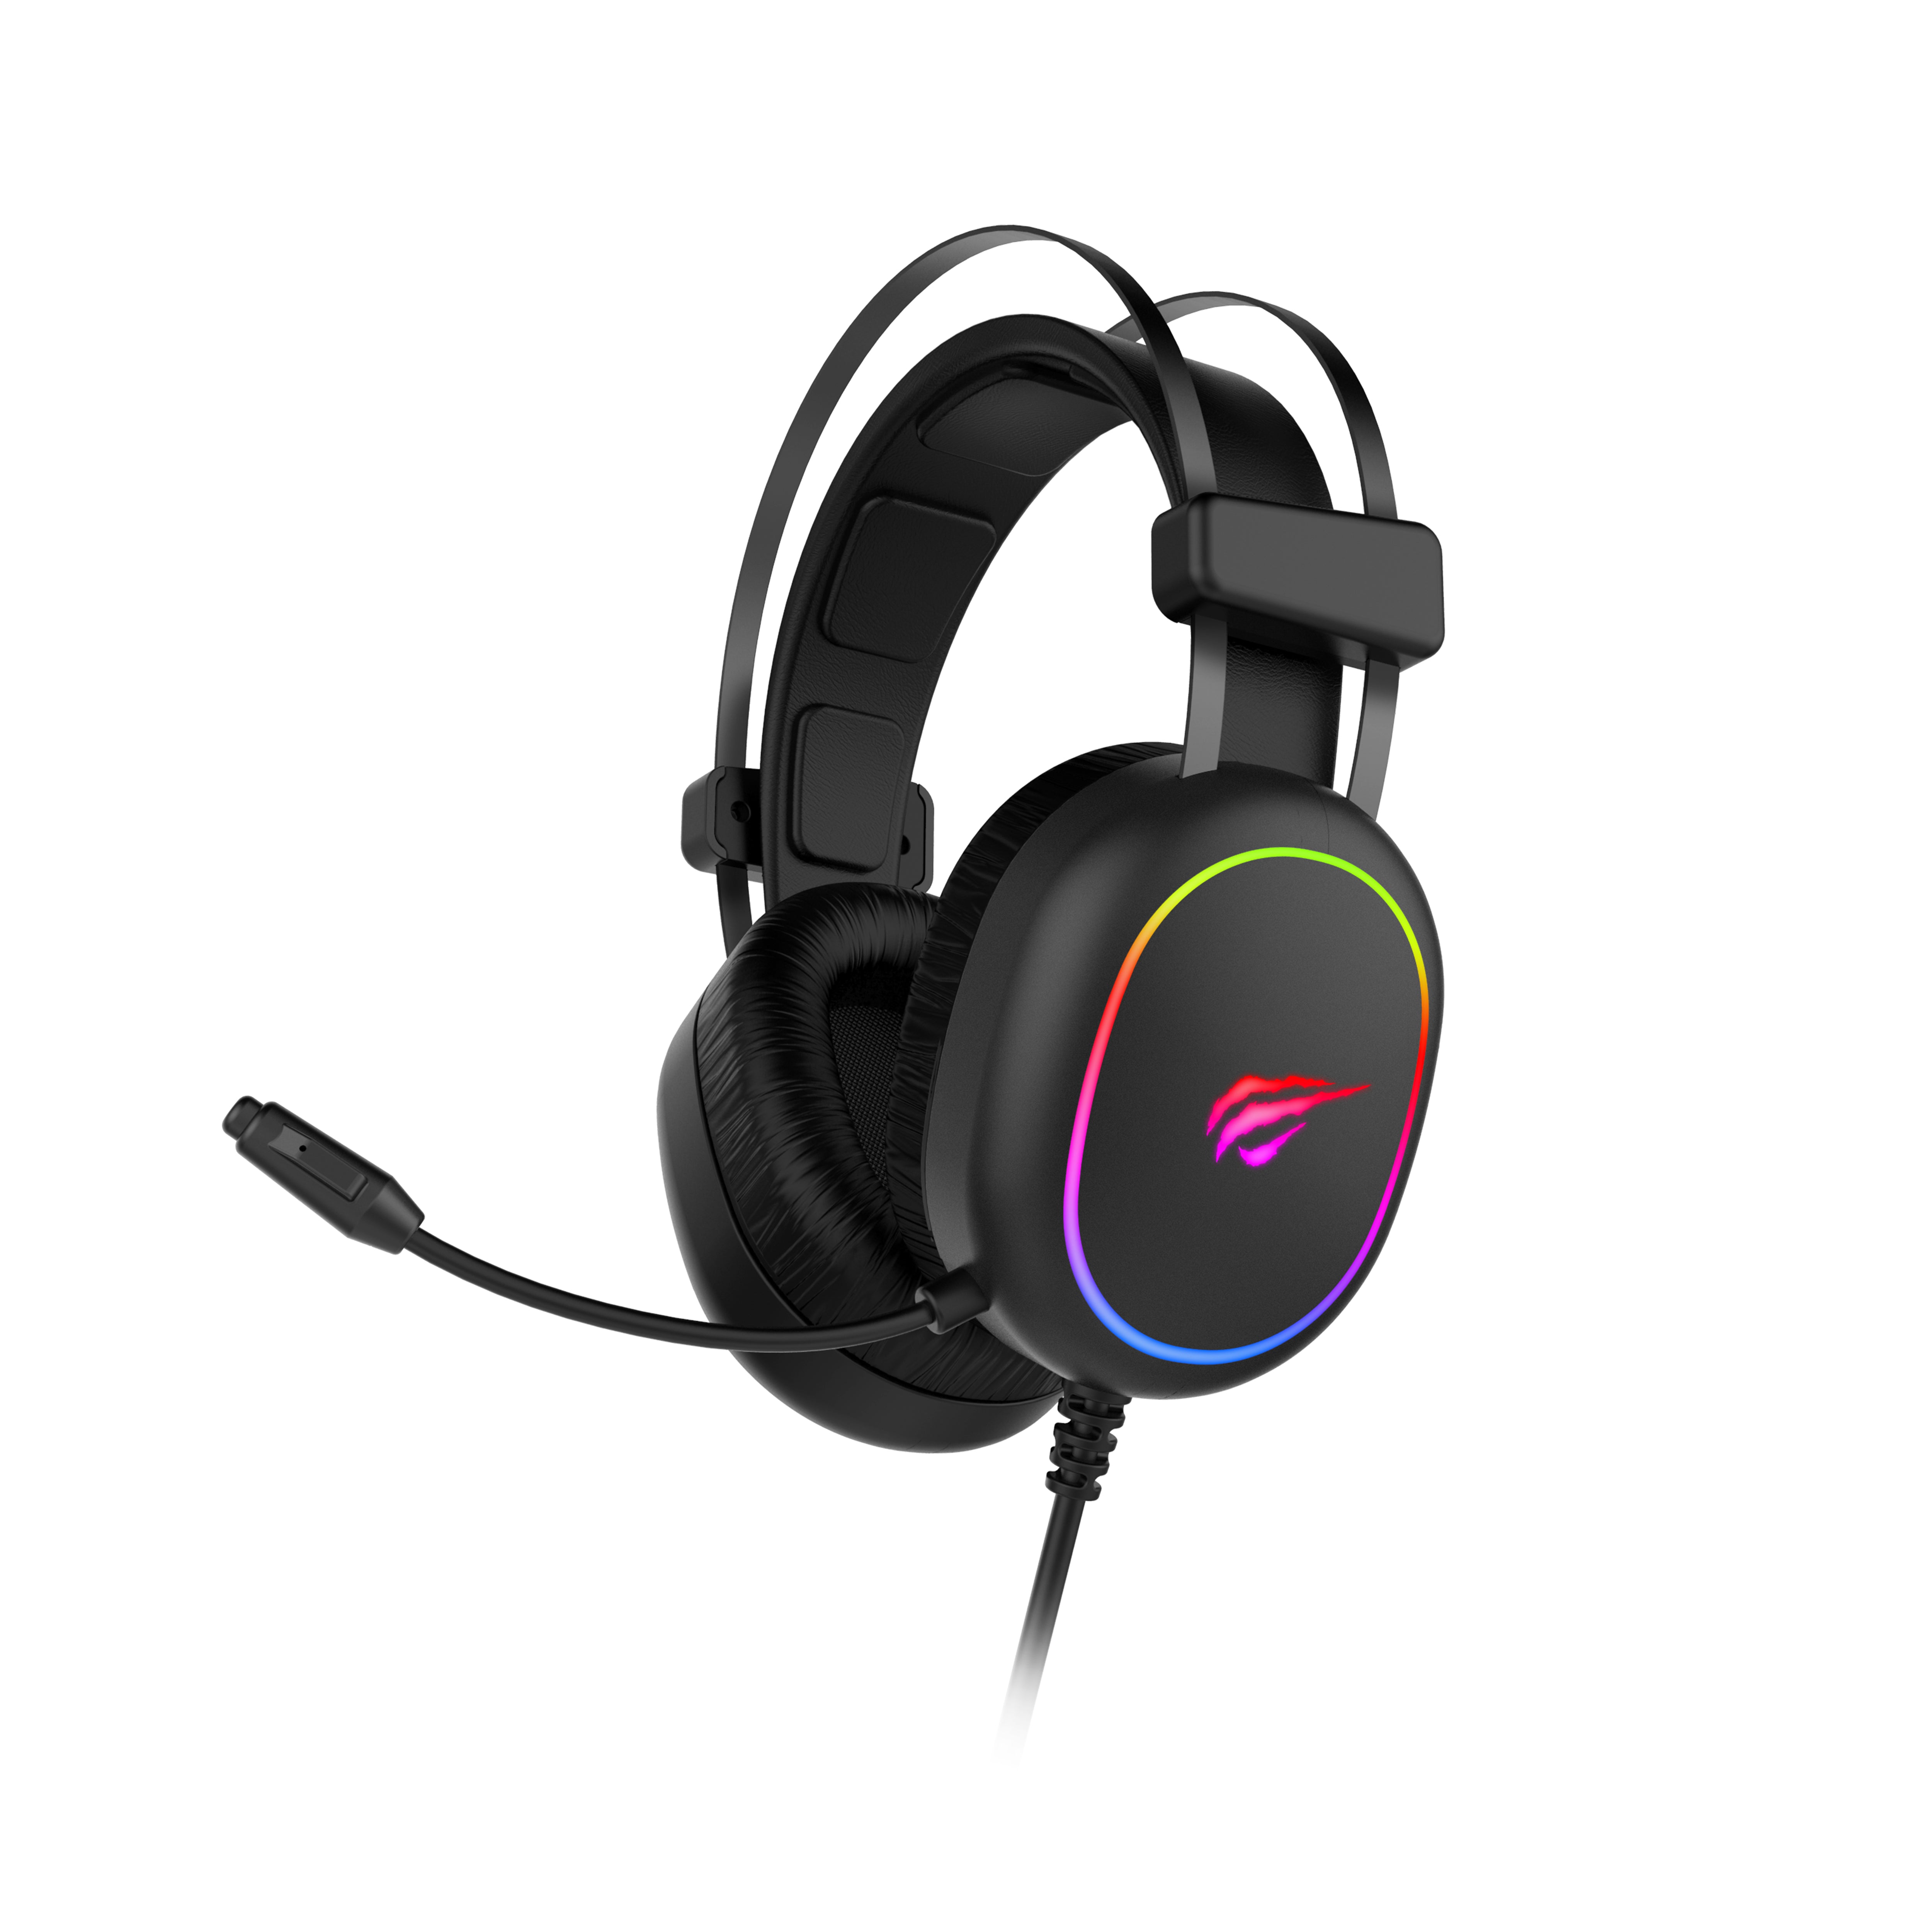 Havit H2016d GAMENOTE RGB Gaming Headphone